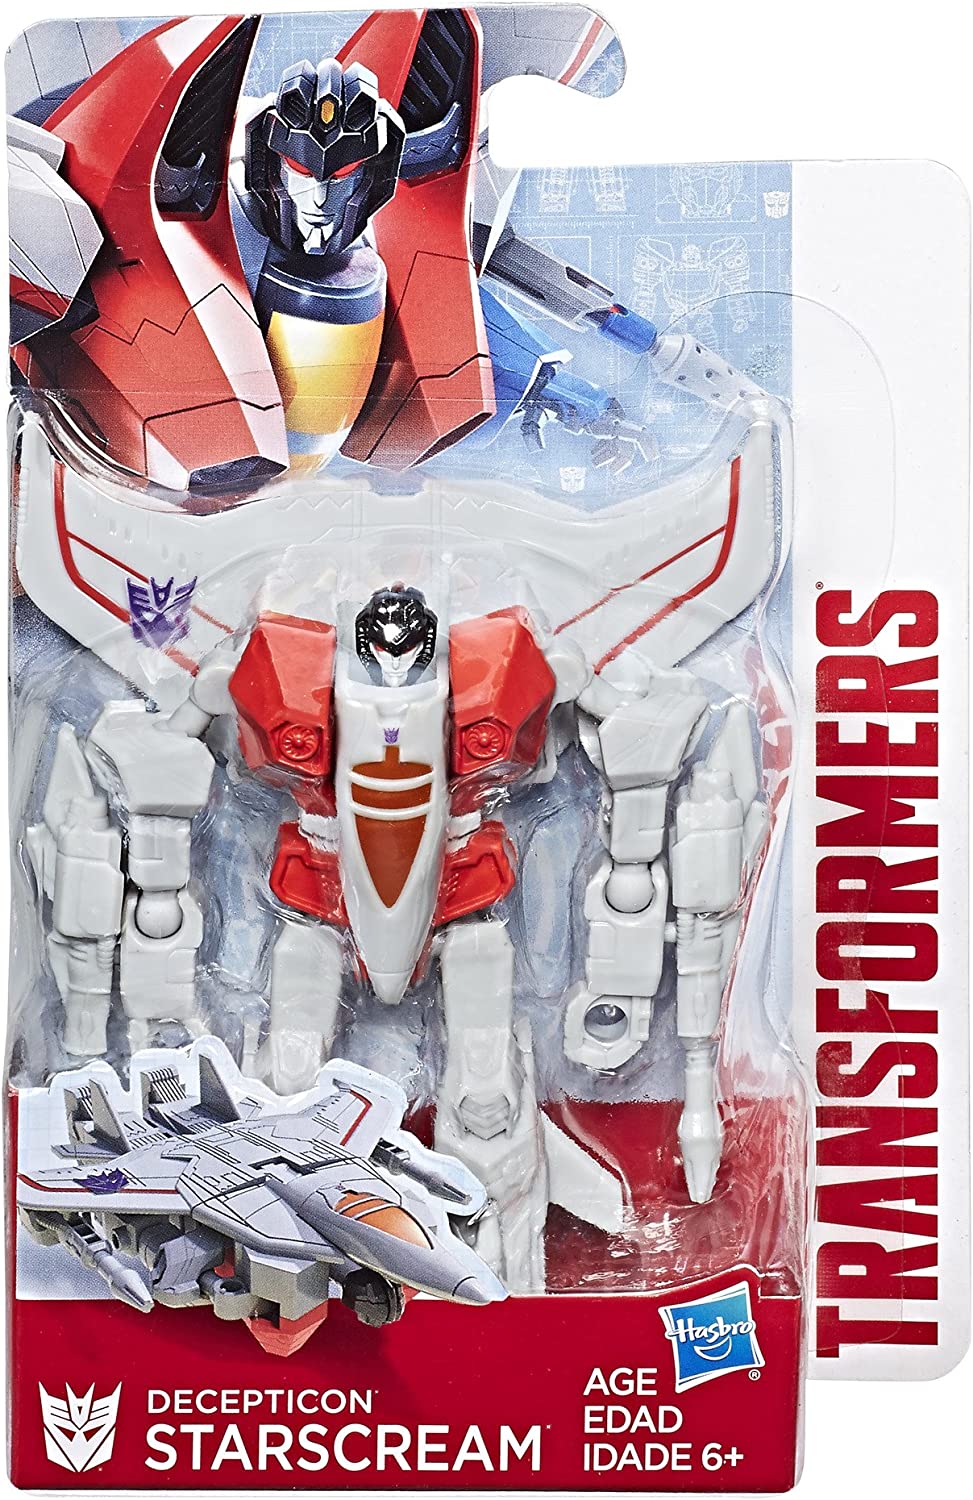 Figurine Transformers Autobot/Decepticon Hasbro - Divers modèles